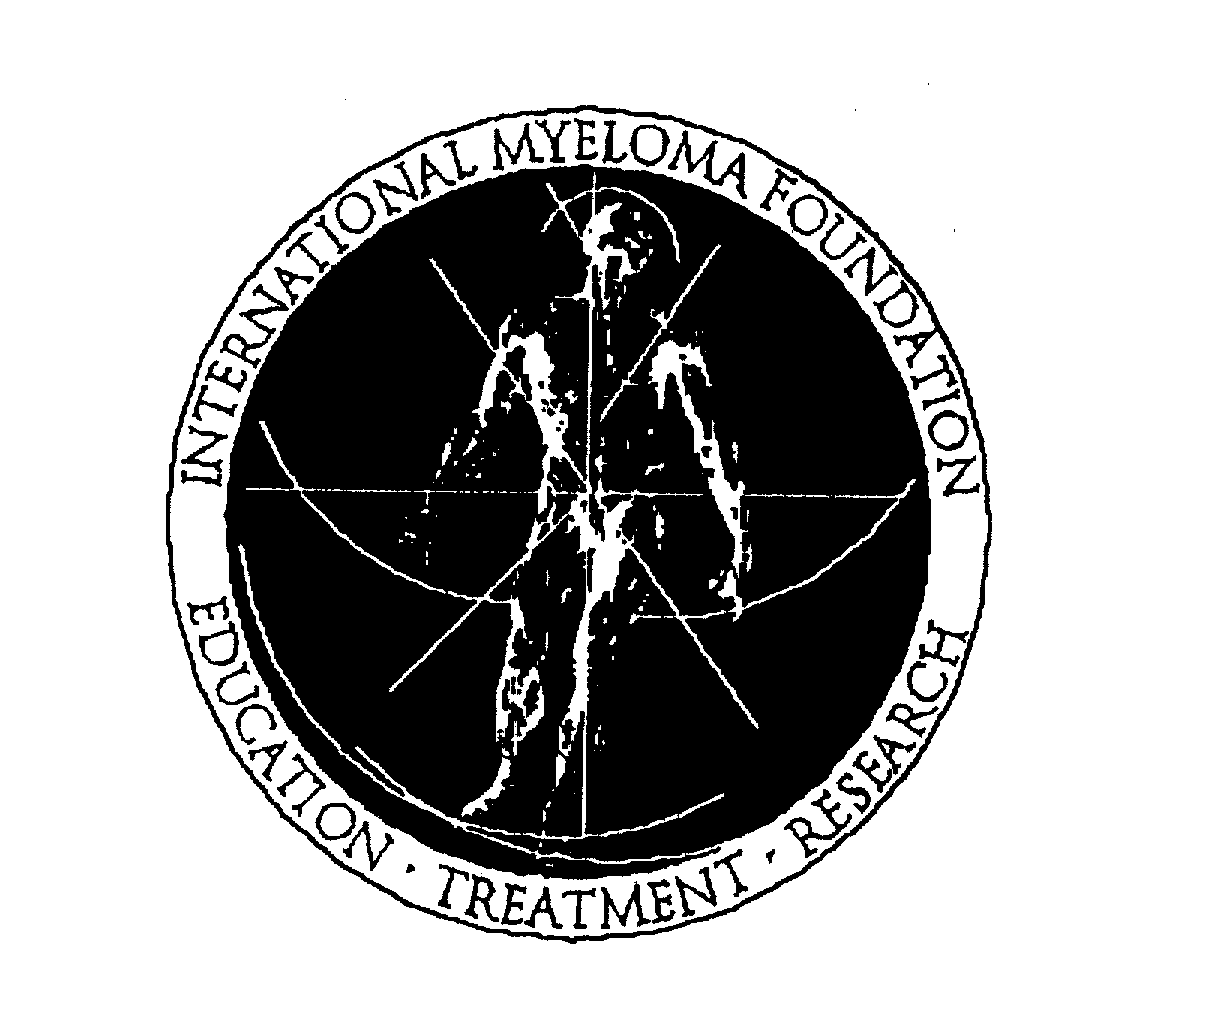  INTERNATIONAL MYELOMA FOUNDATION EDUCATION TREATMENT RESEARCH